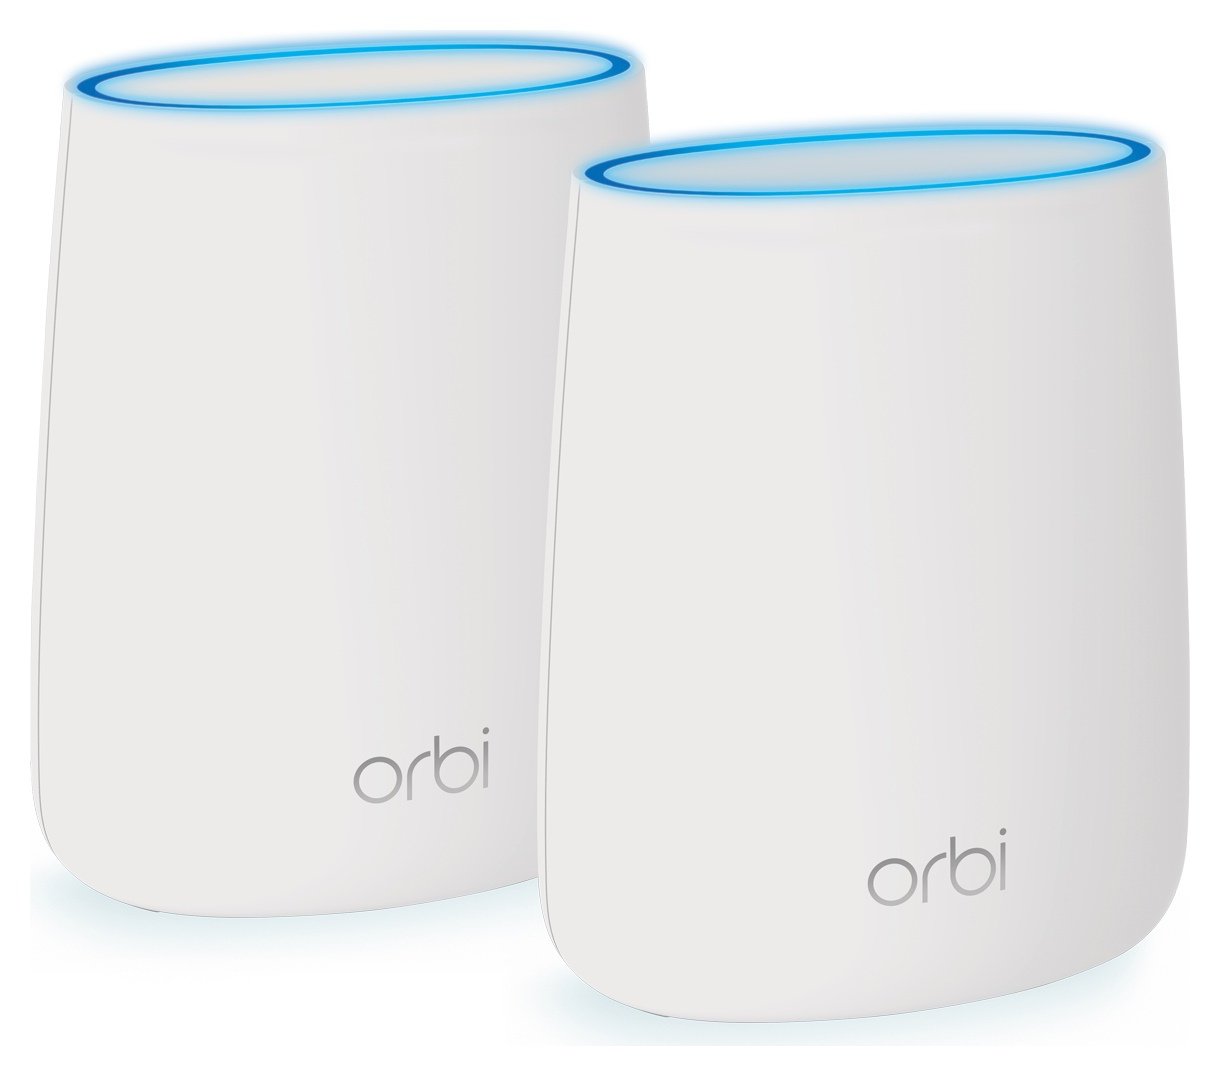 Netgear Orbi Whole Home Wifi System - Twin Pack